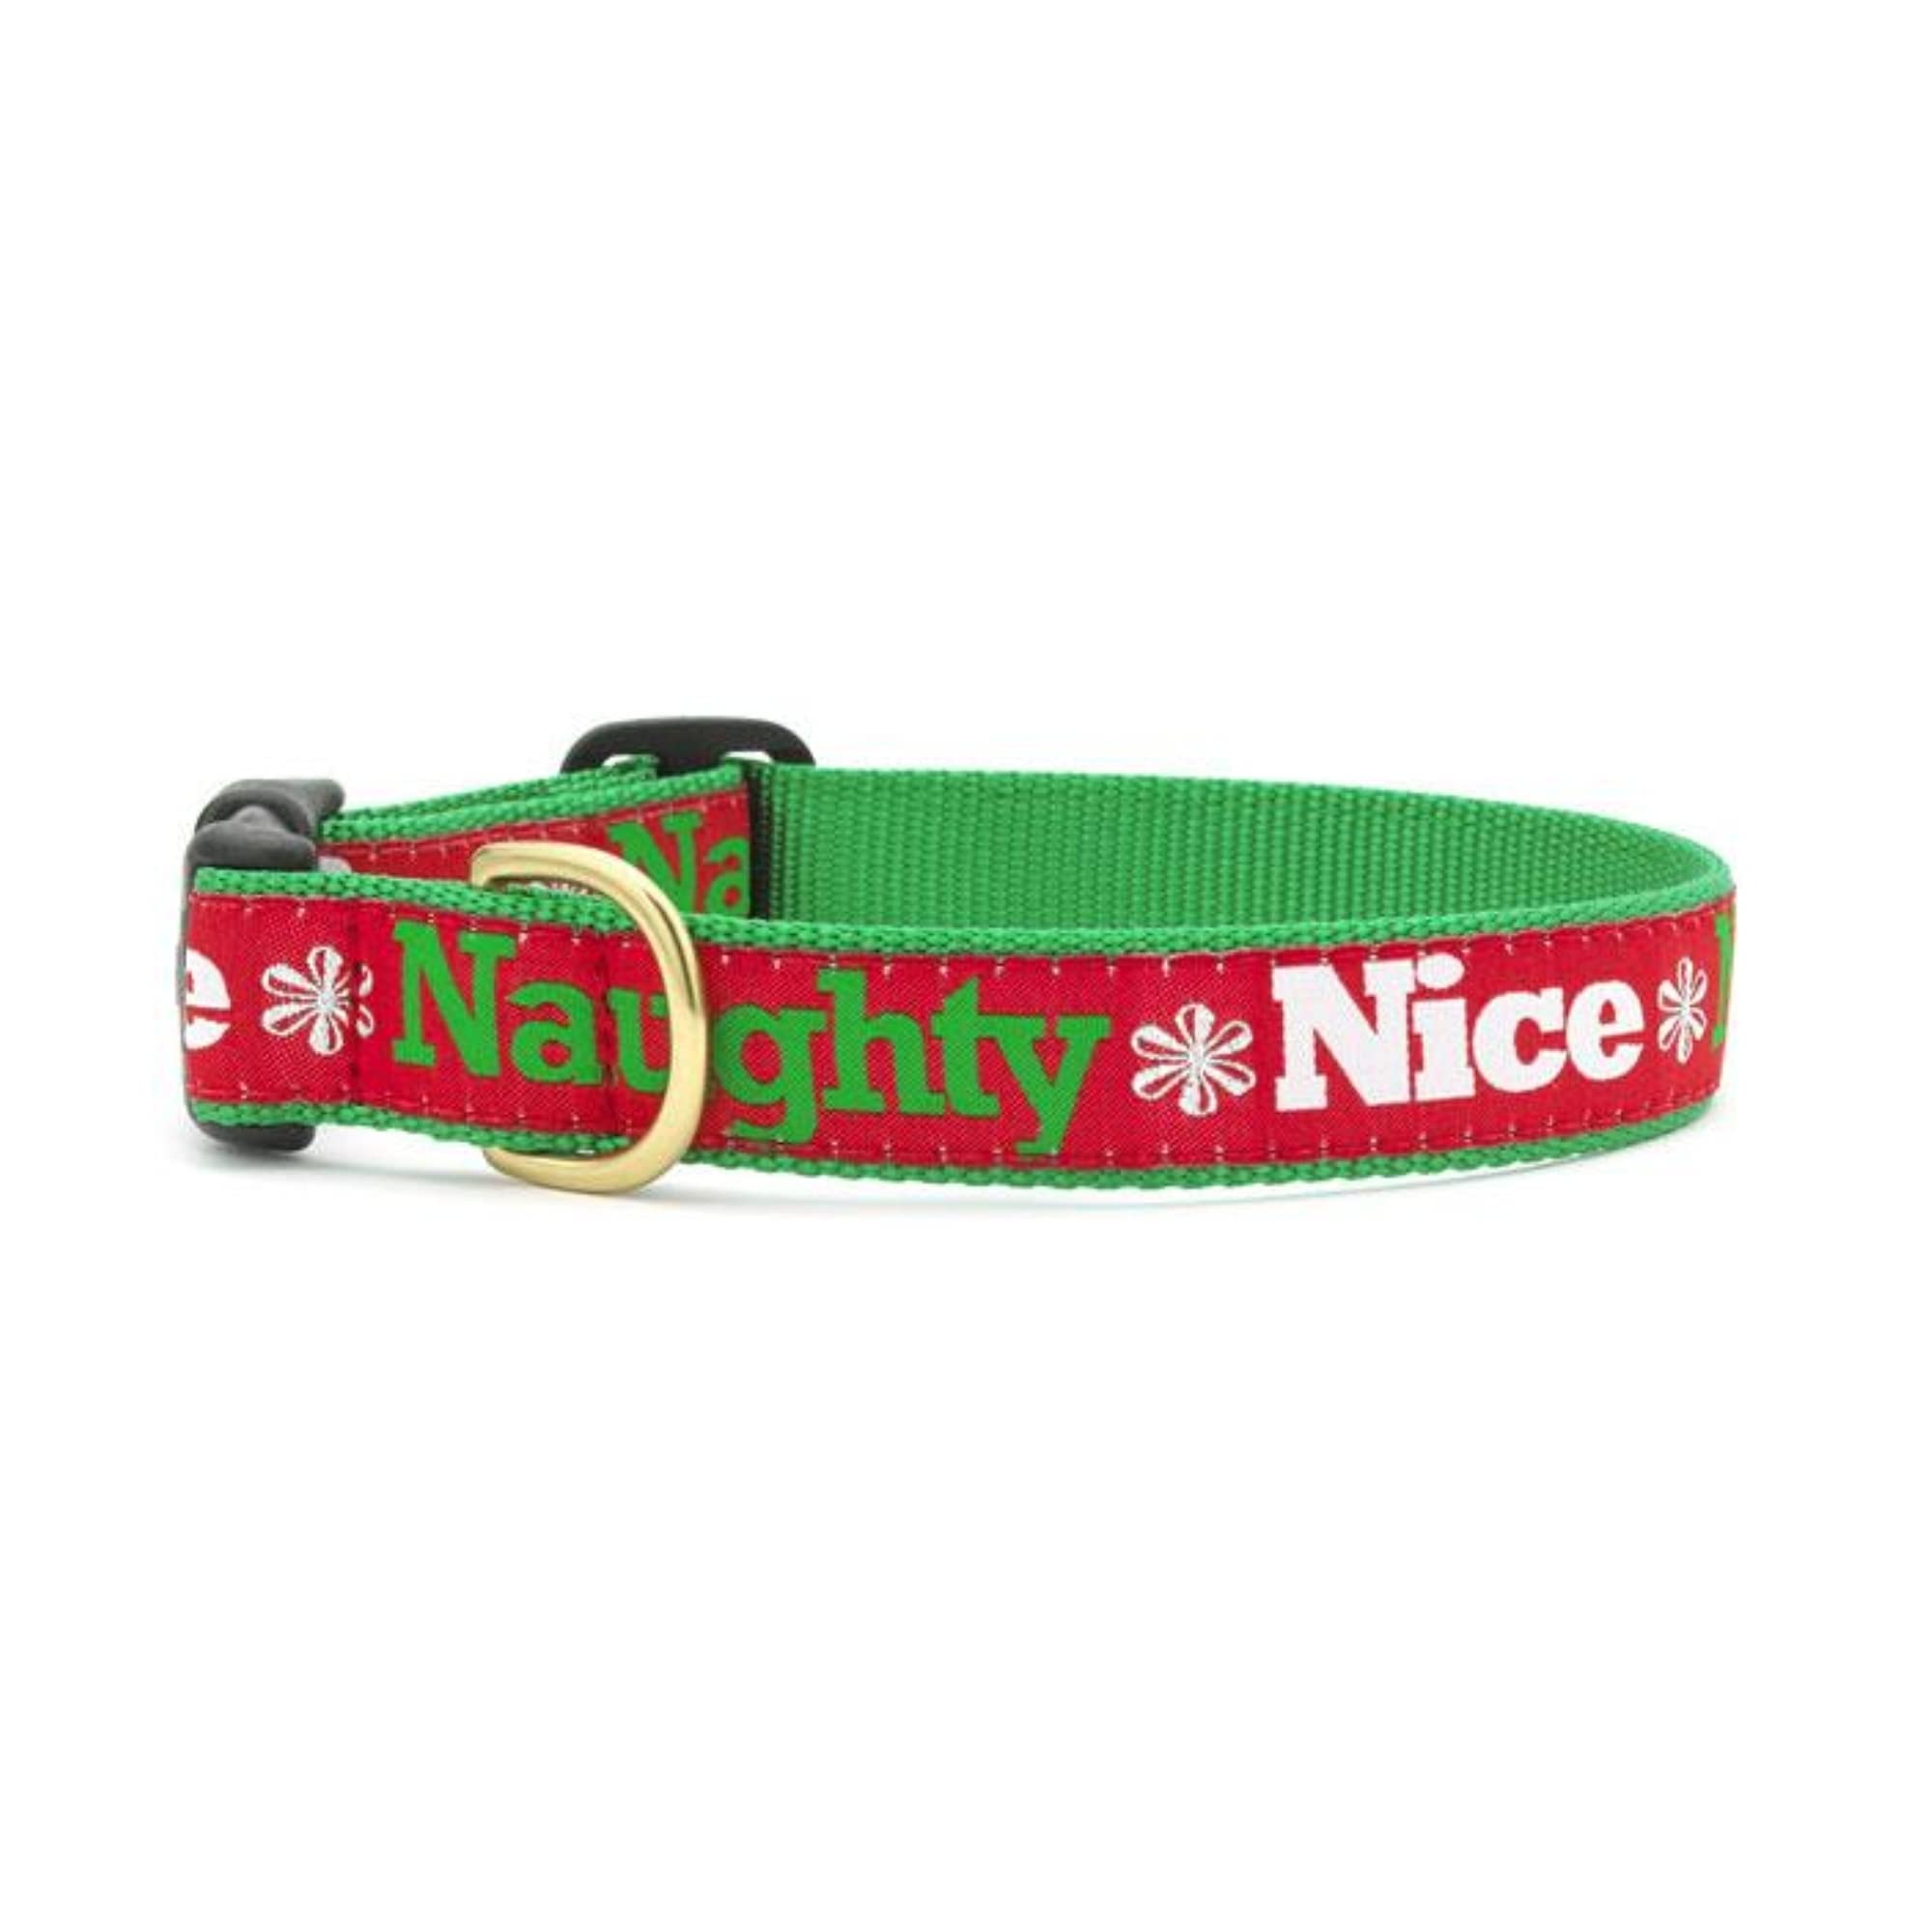 Up Country NAN-C-S Naughty and Nice Collar S Schmal (5/8") Hundehalsband, 200 g